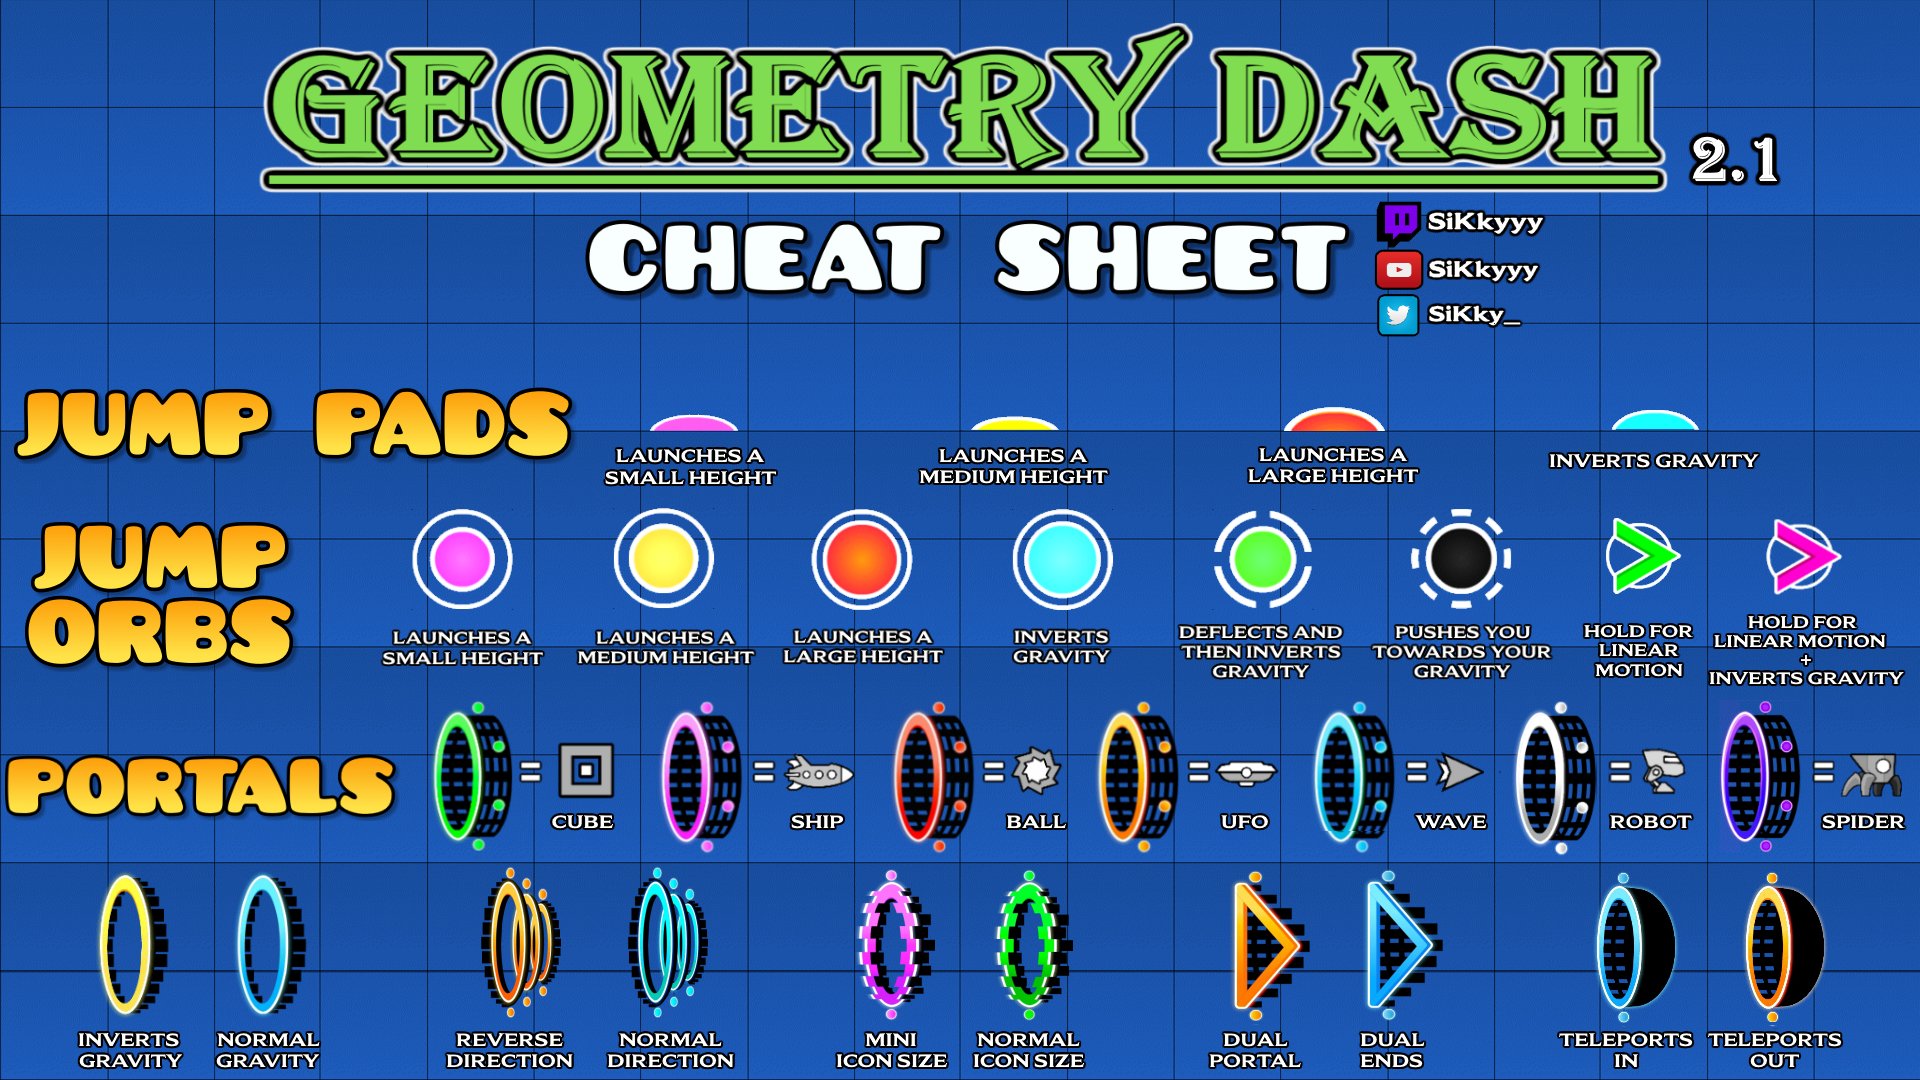 I made a Cheat Sheet : r/geometrydash